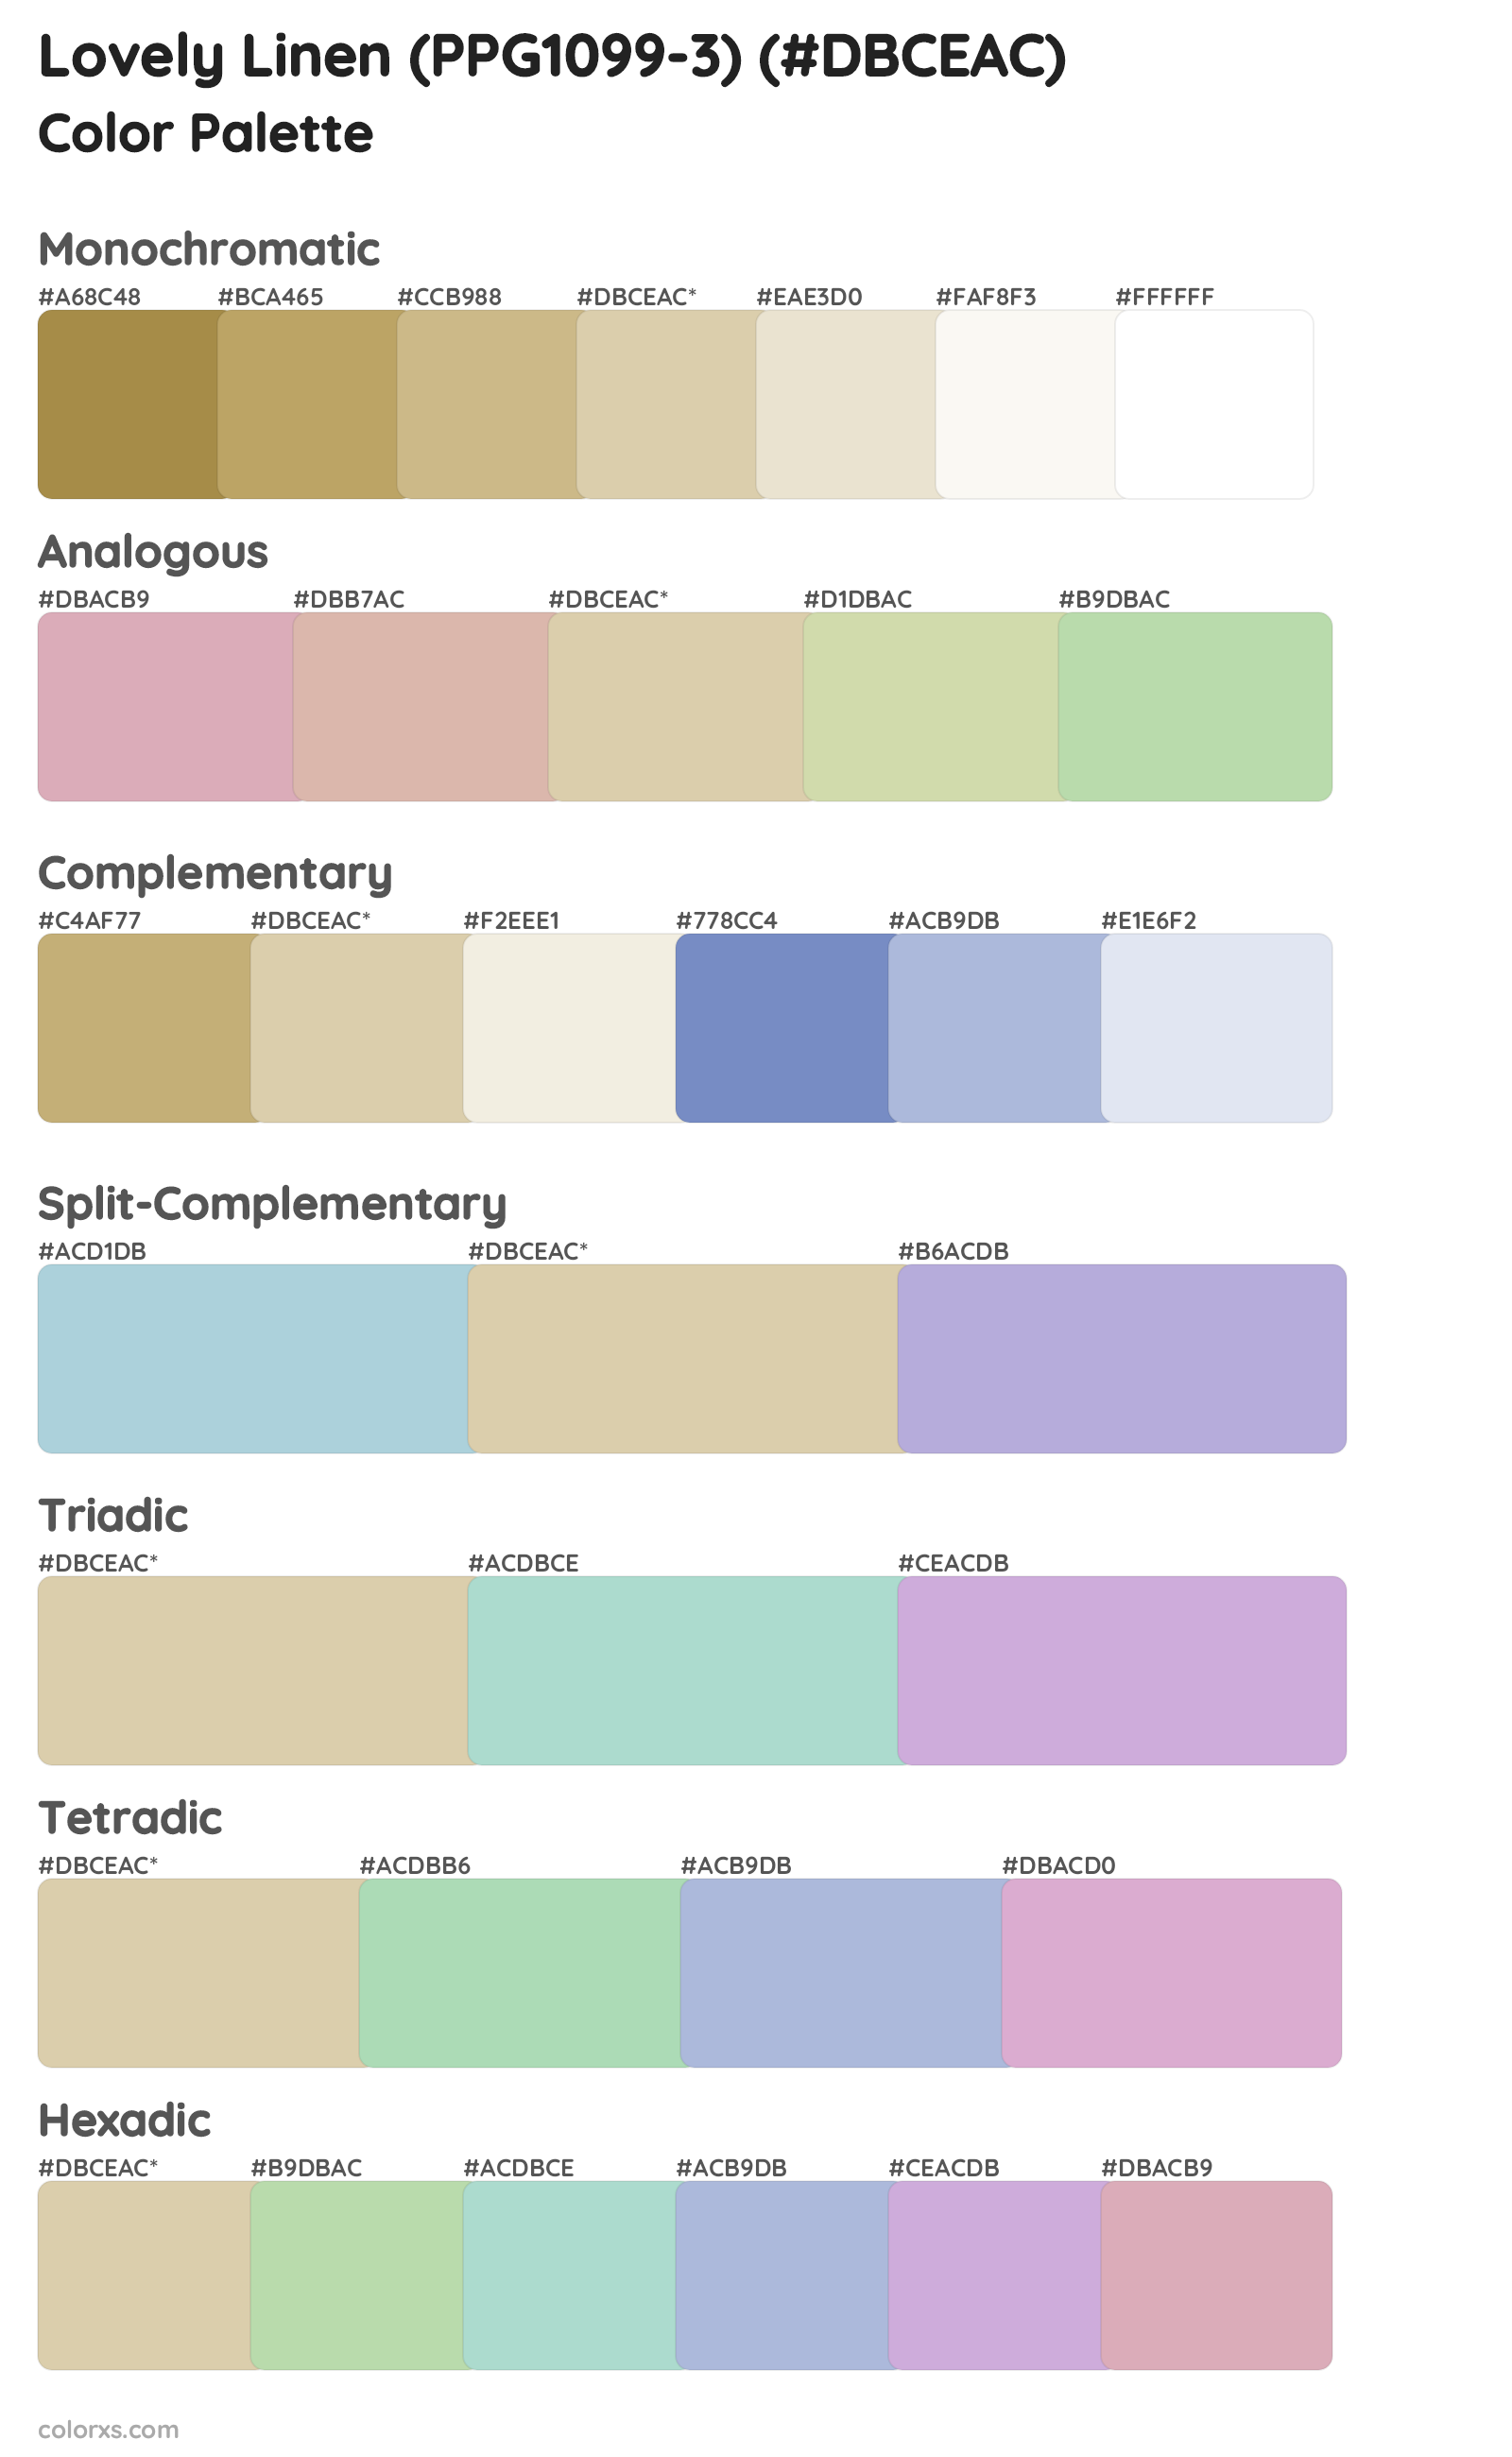 Lovely Linen (PPG1099-3) Color Scheme Palettes